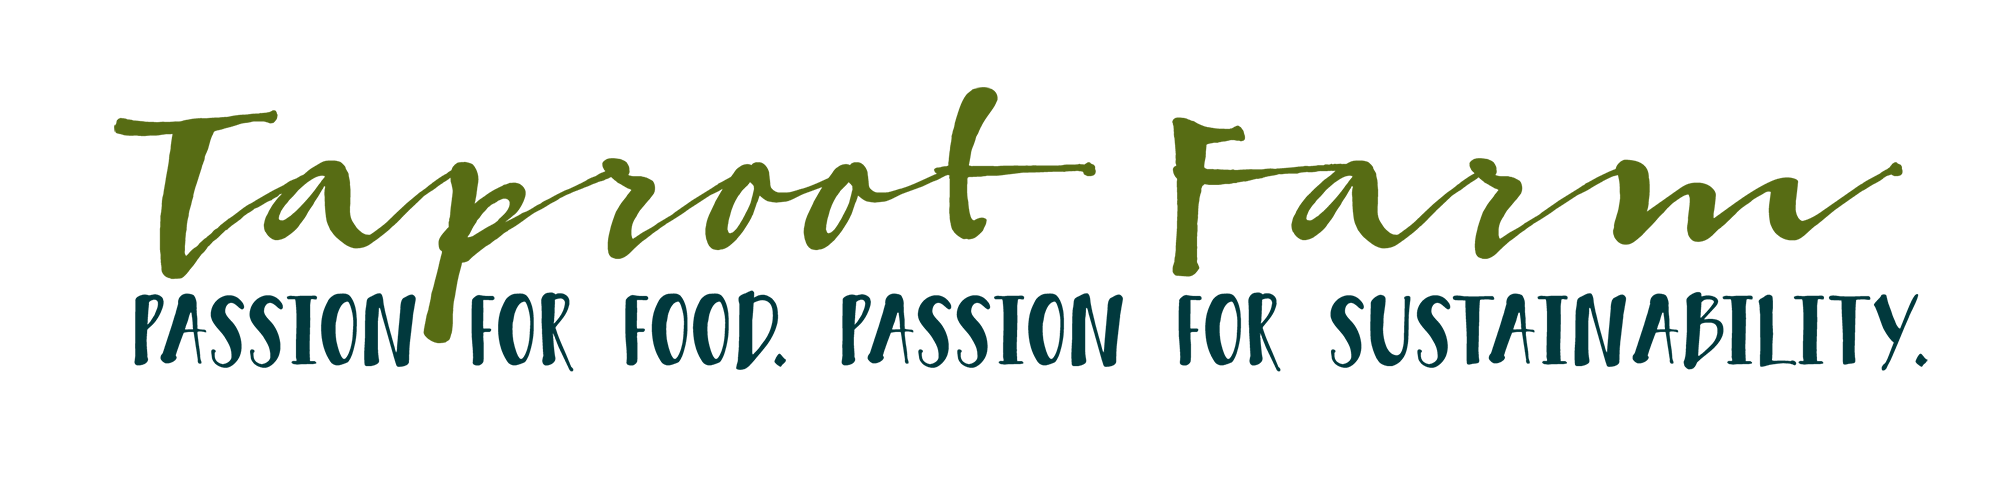 Taproot Farm logo